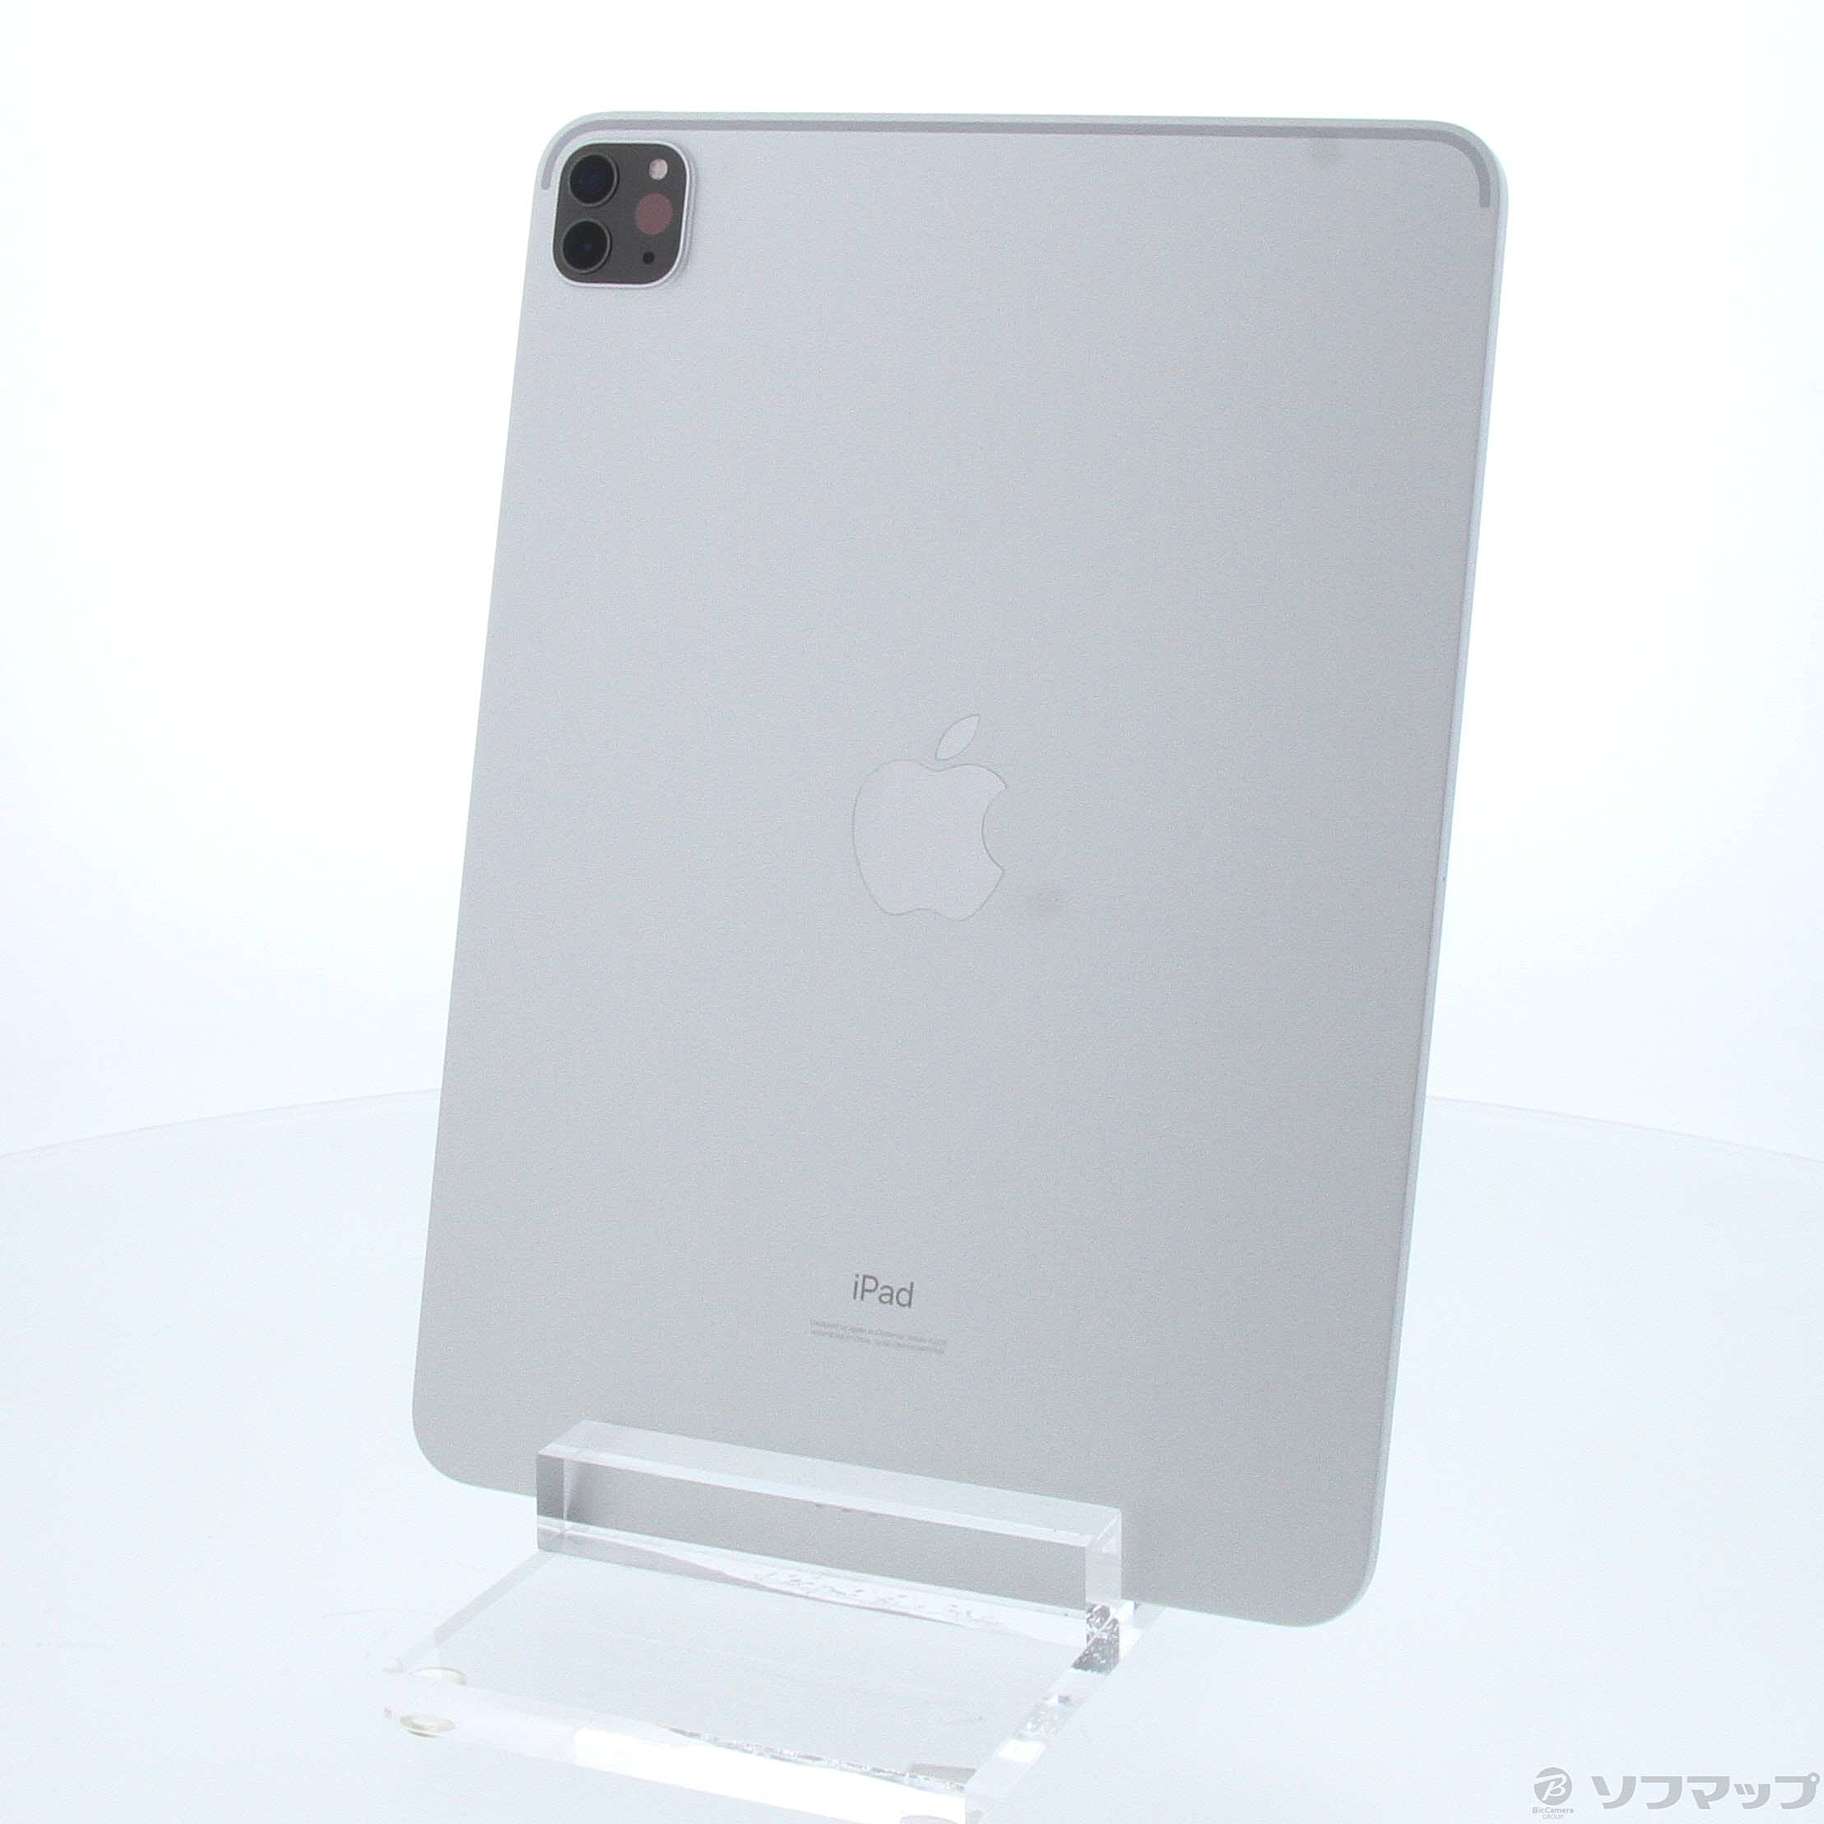 iPad Pro 11インチ第2世代 128GB WiFi シルバーCPUAppleA12Z